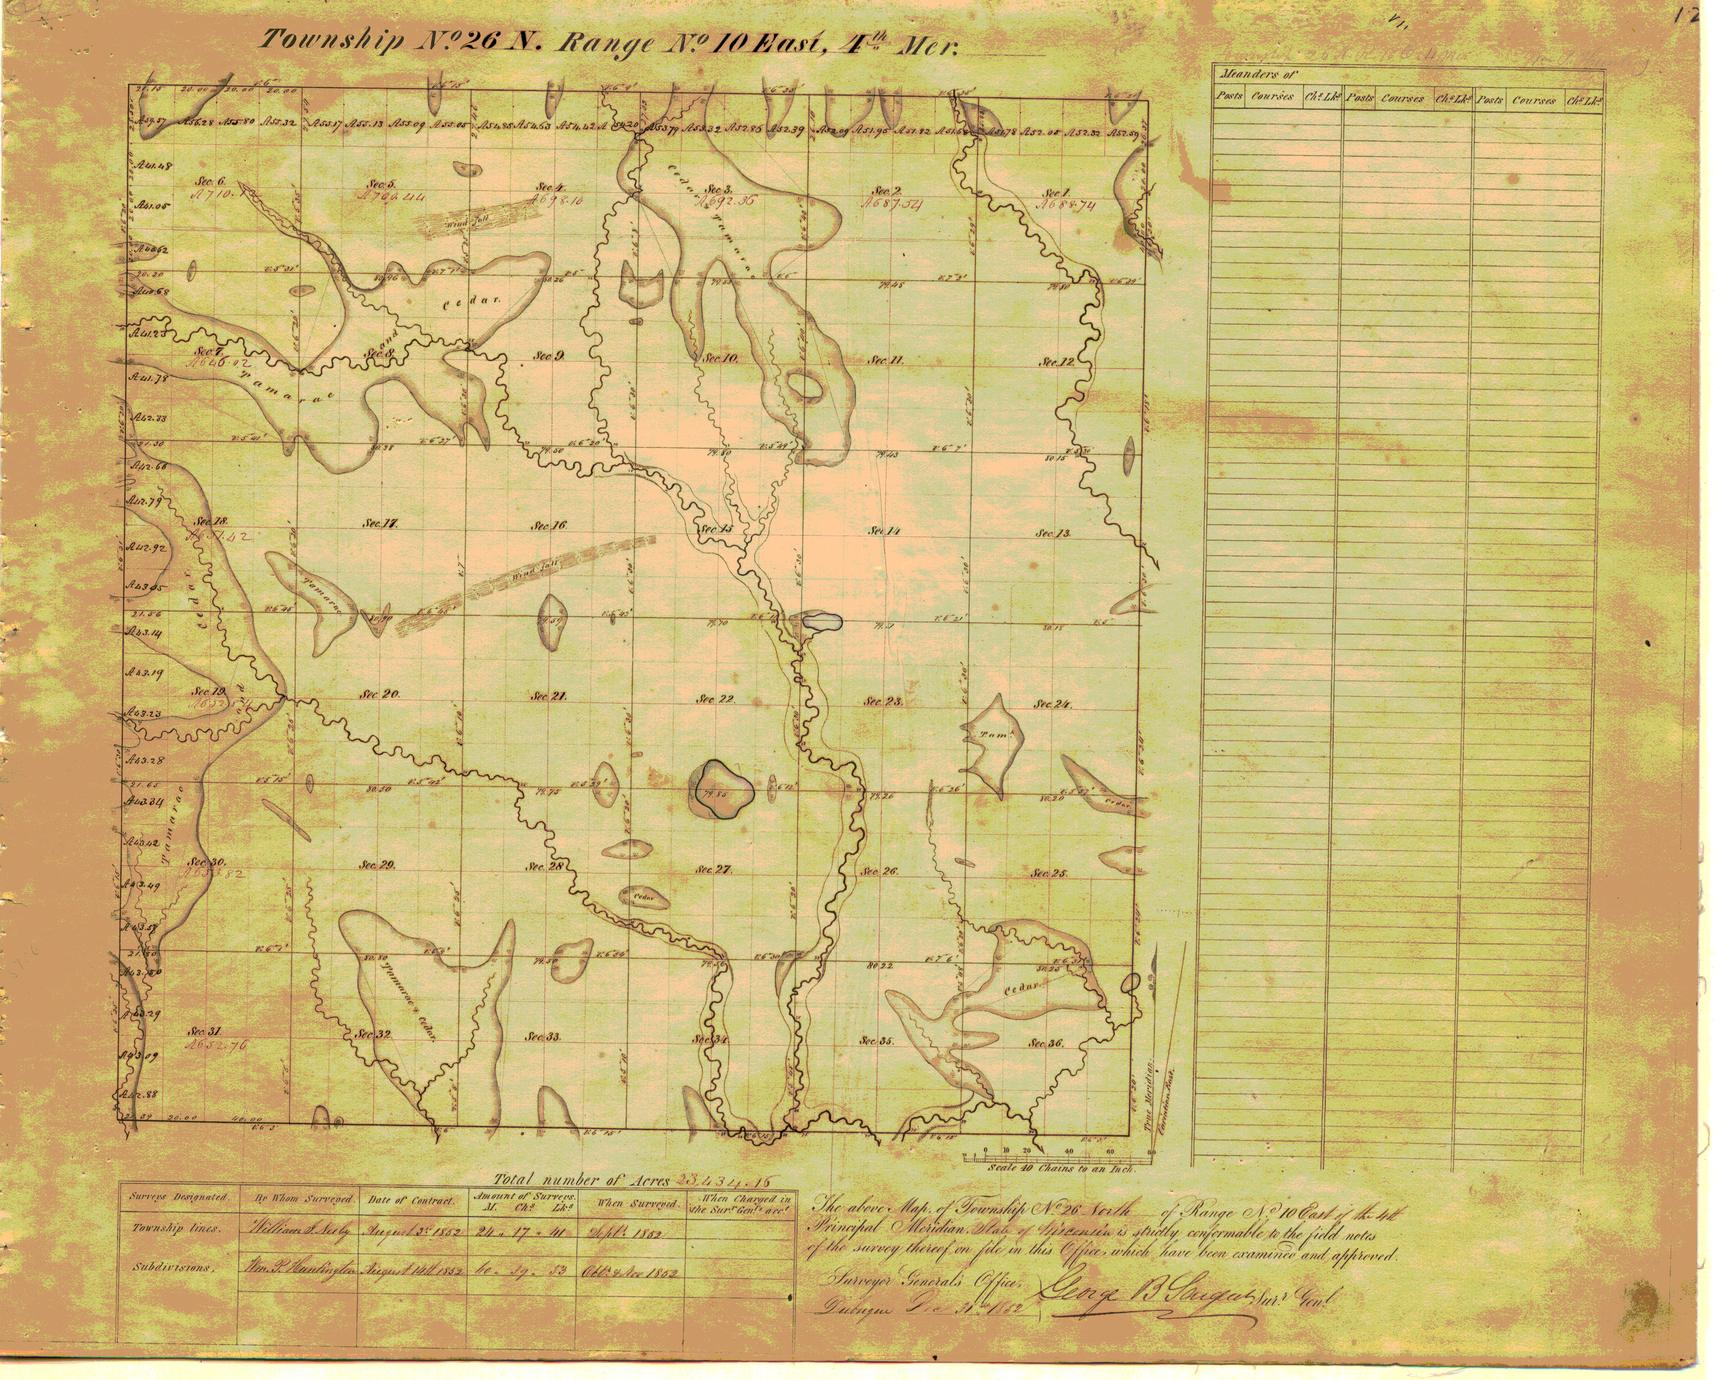 [Public Land Survey System map: Wisconsin Township 26 North, Range 10 East]